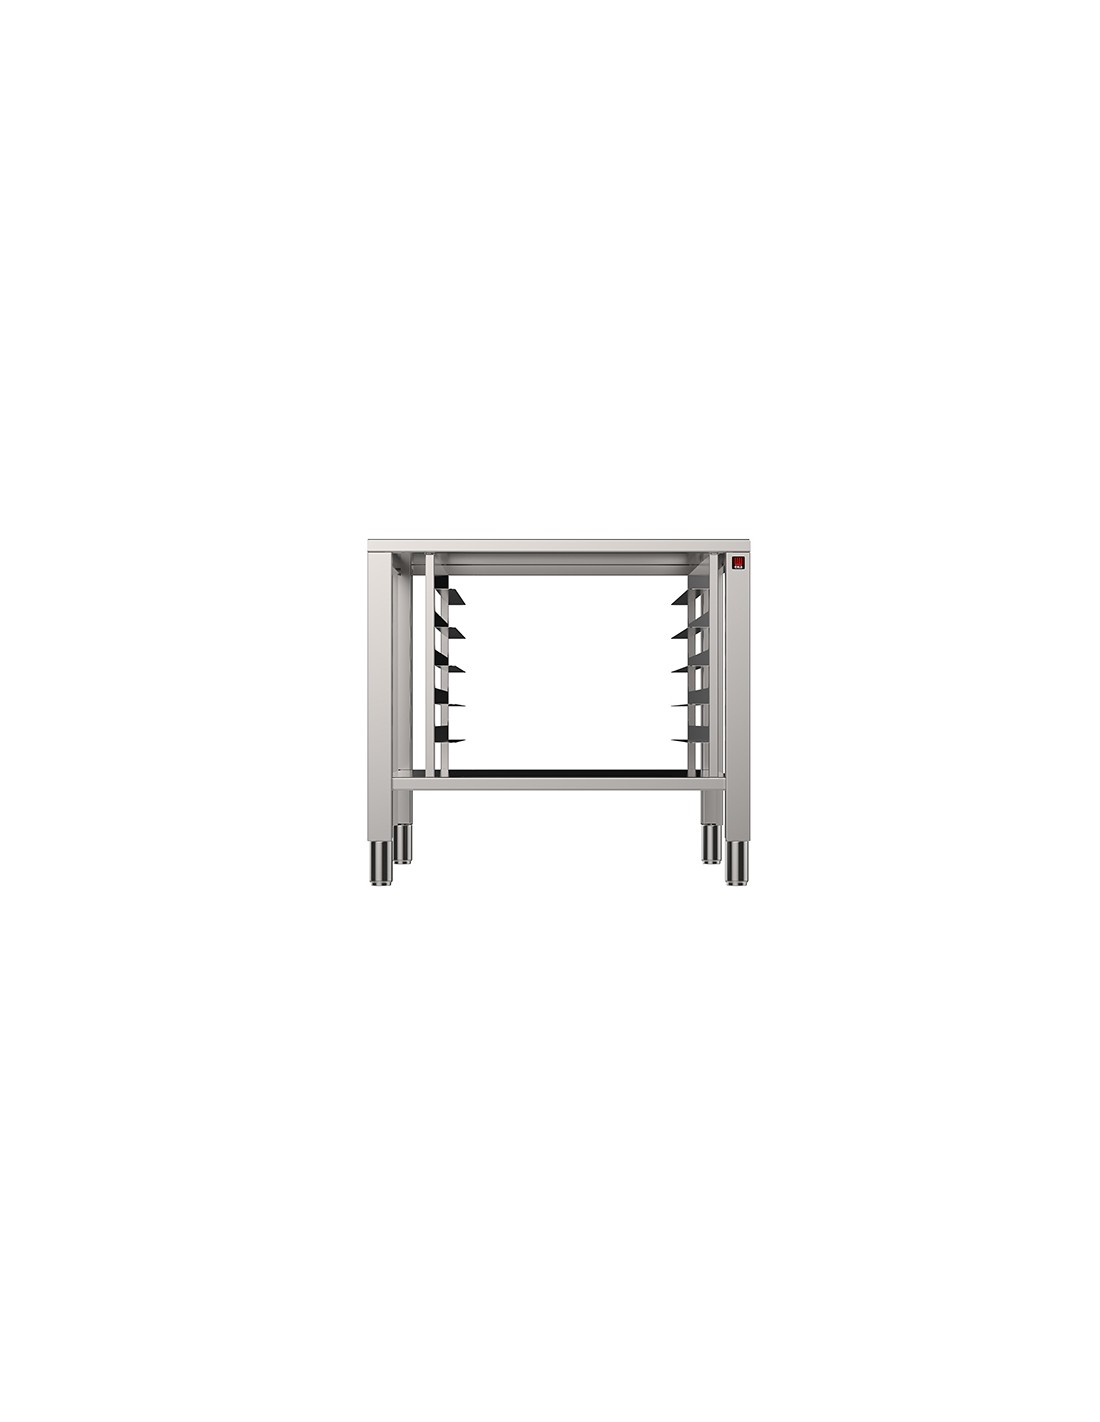 Mesa fija - Acero inoxidable AISI 430 - Con soportes - Dimensiones 85 x 106 x 77 h